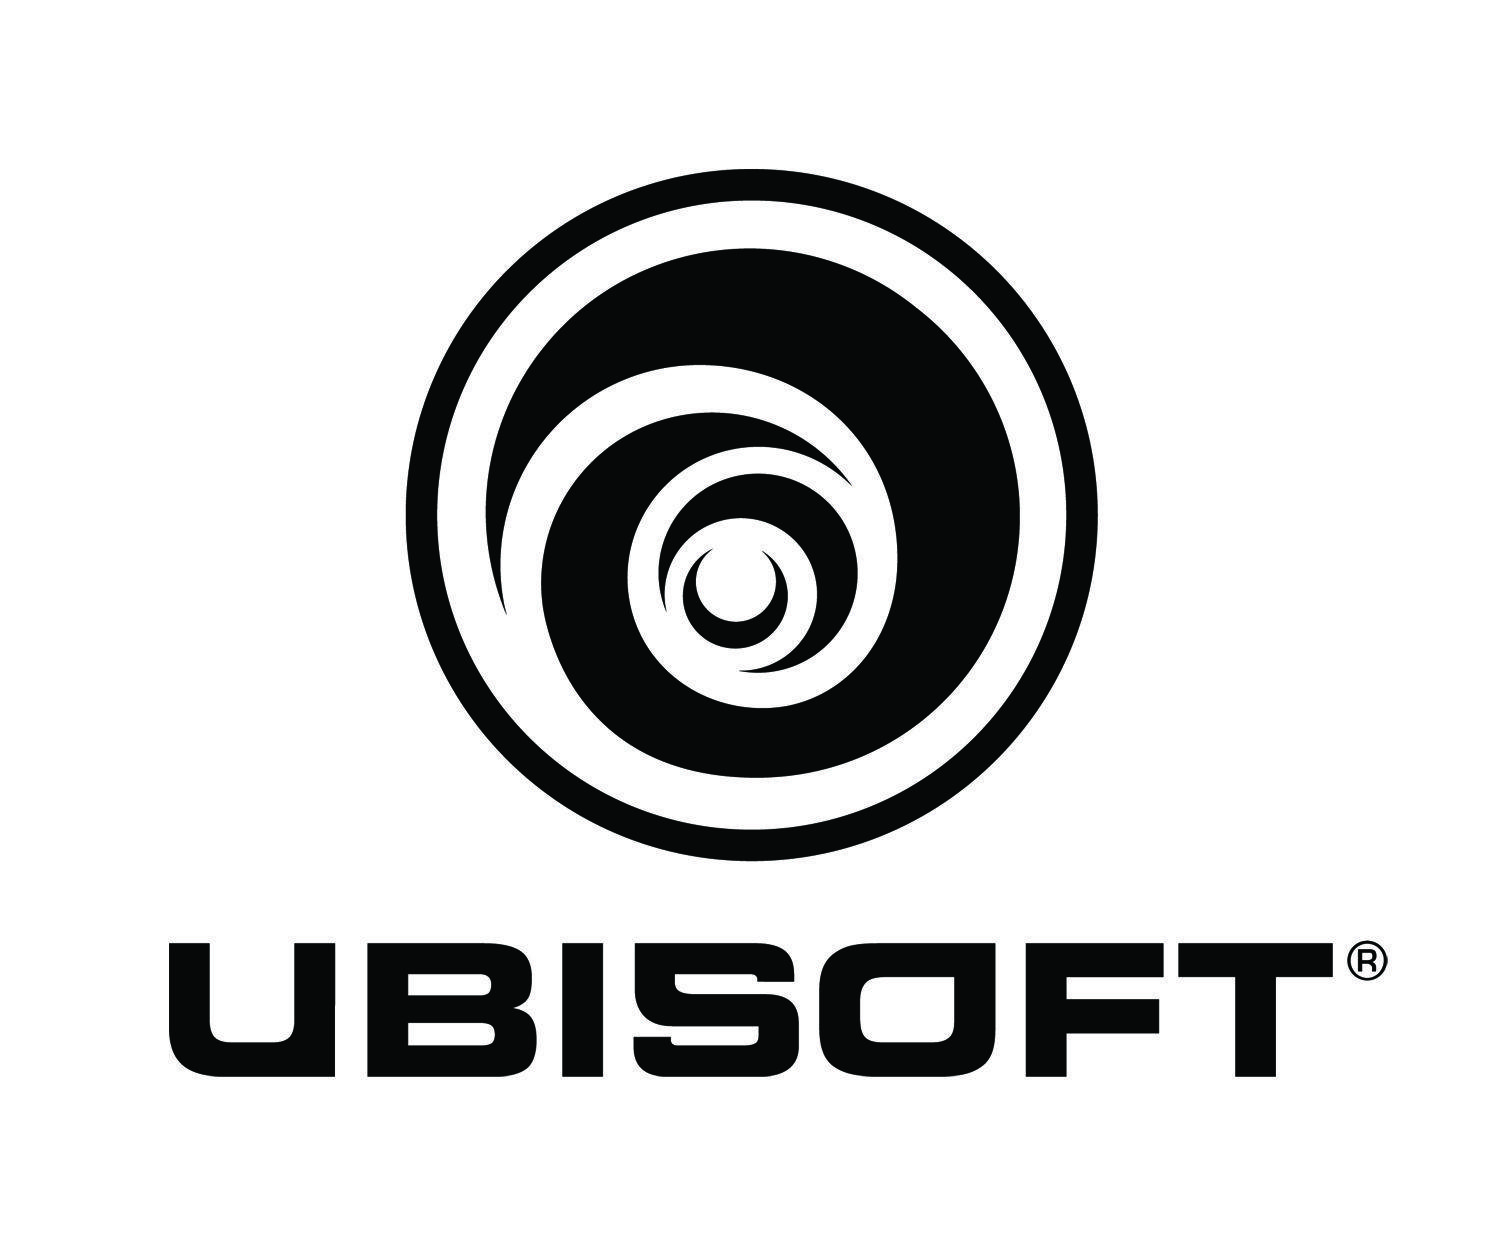 Ubisoft Logo - Image - Ubisoft logo Monochrome.jpg | Logopedia | FANDOM powered by ...